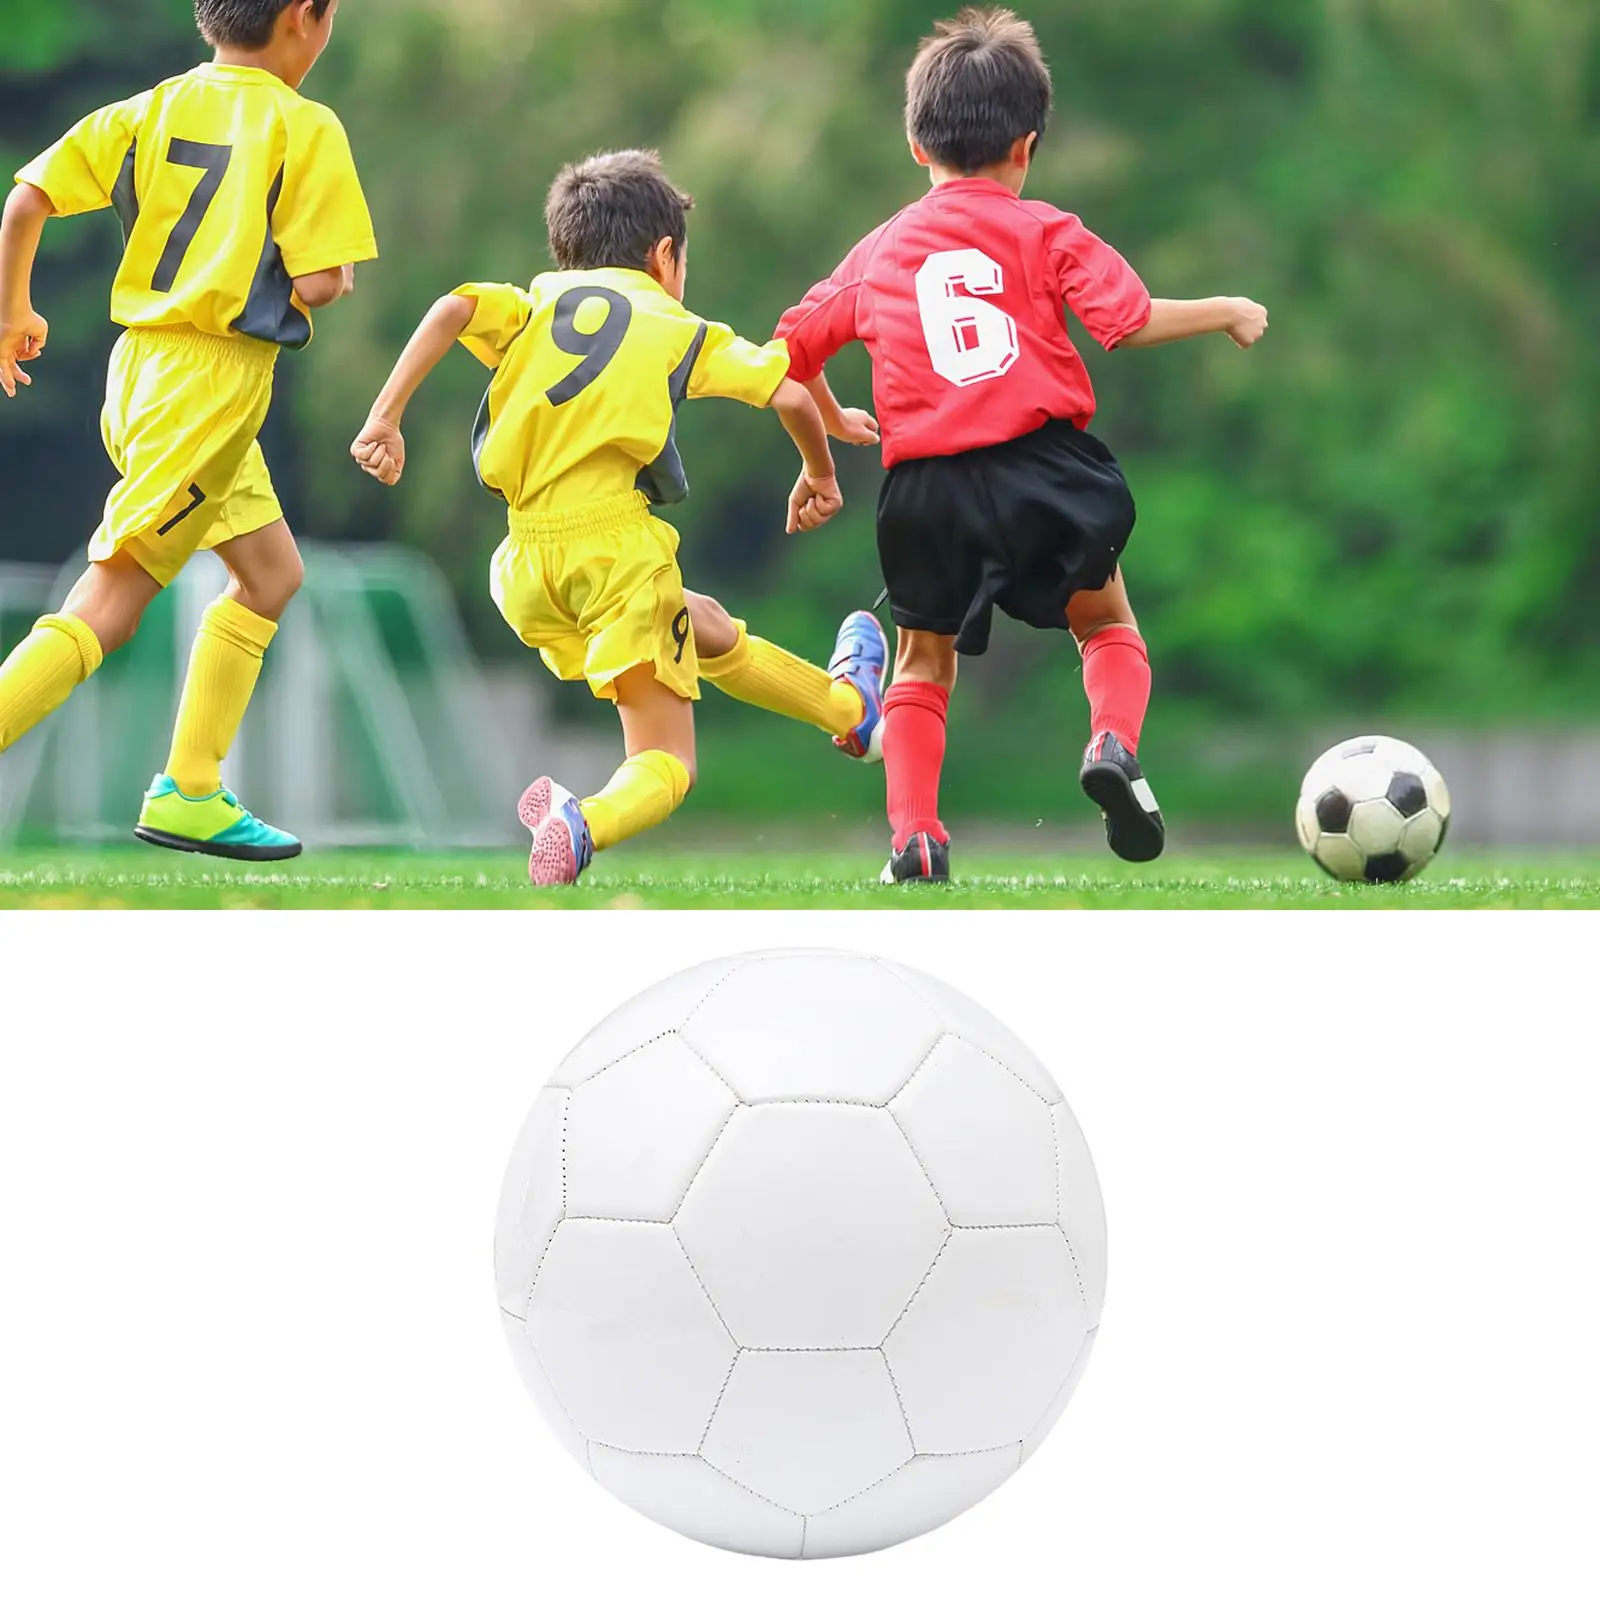 Official Size 5 White Soccer Ball Premier High Quality Seamless Goal Team Match Balls Football Training League Football